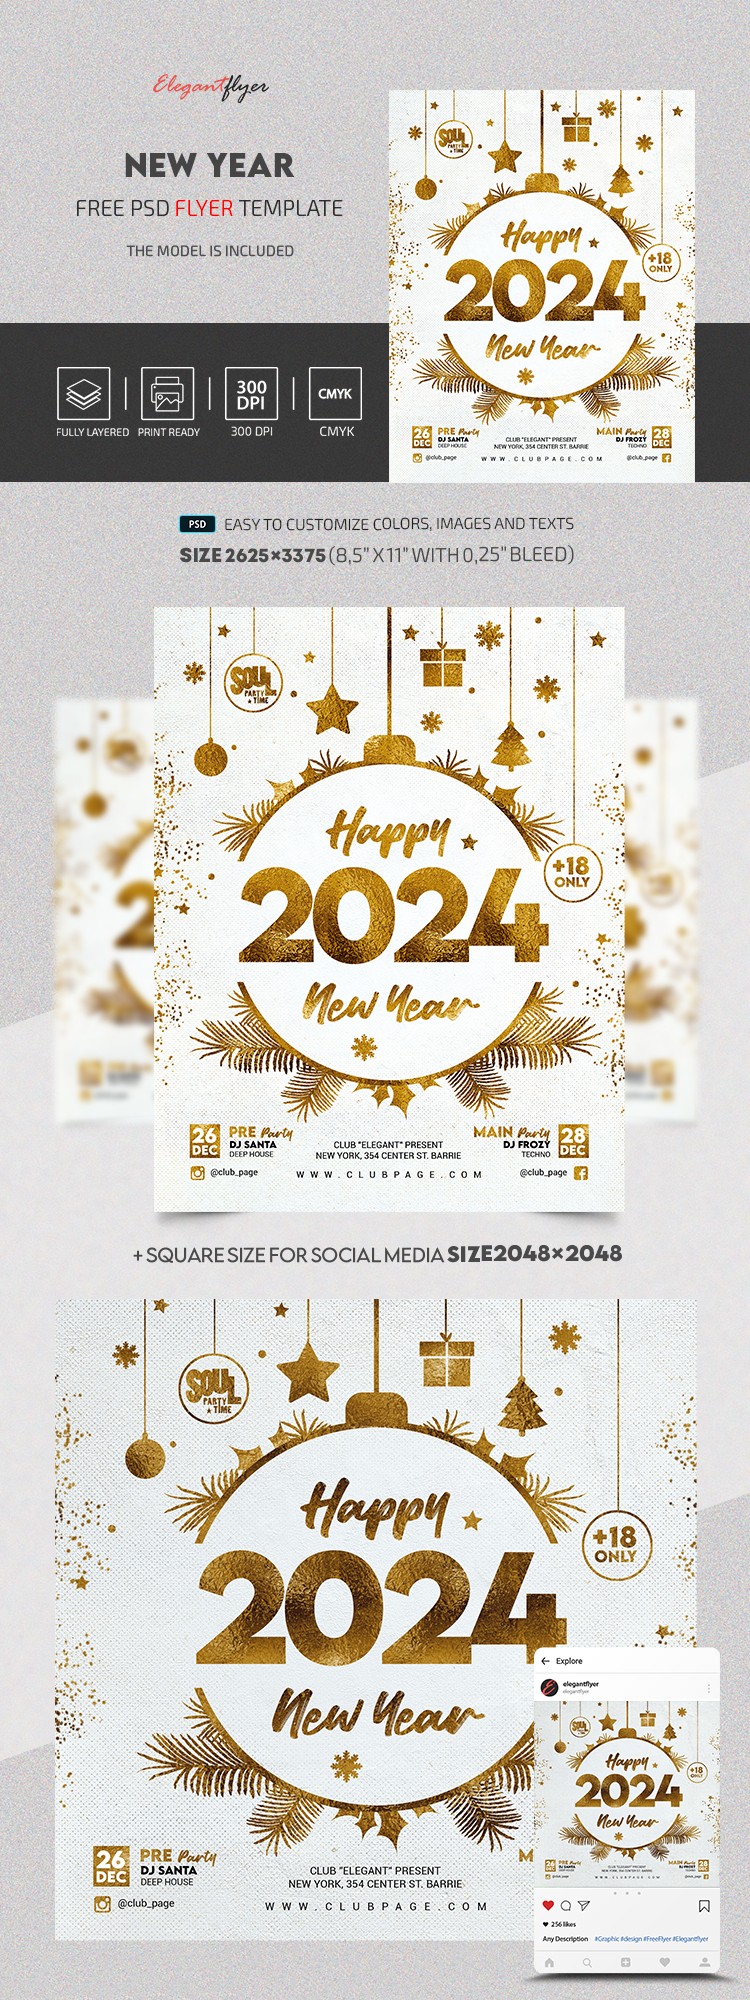 Nowy Rok 2024 by ElegantFlyer